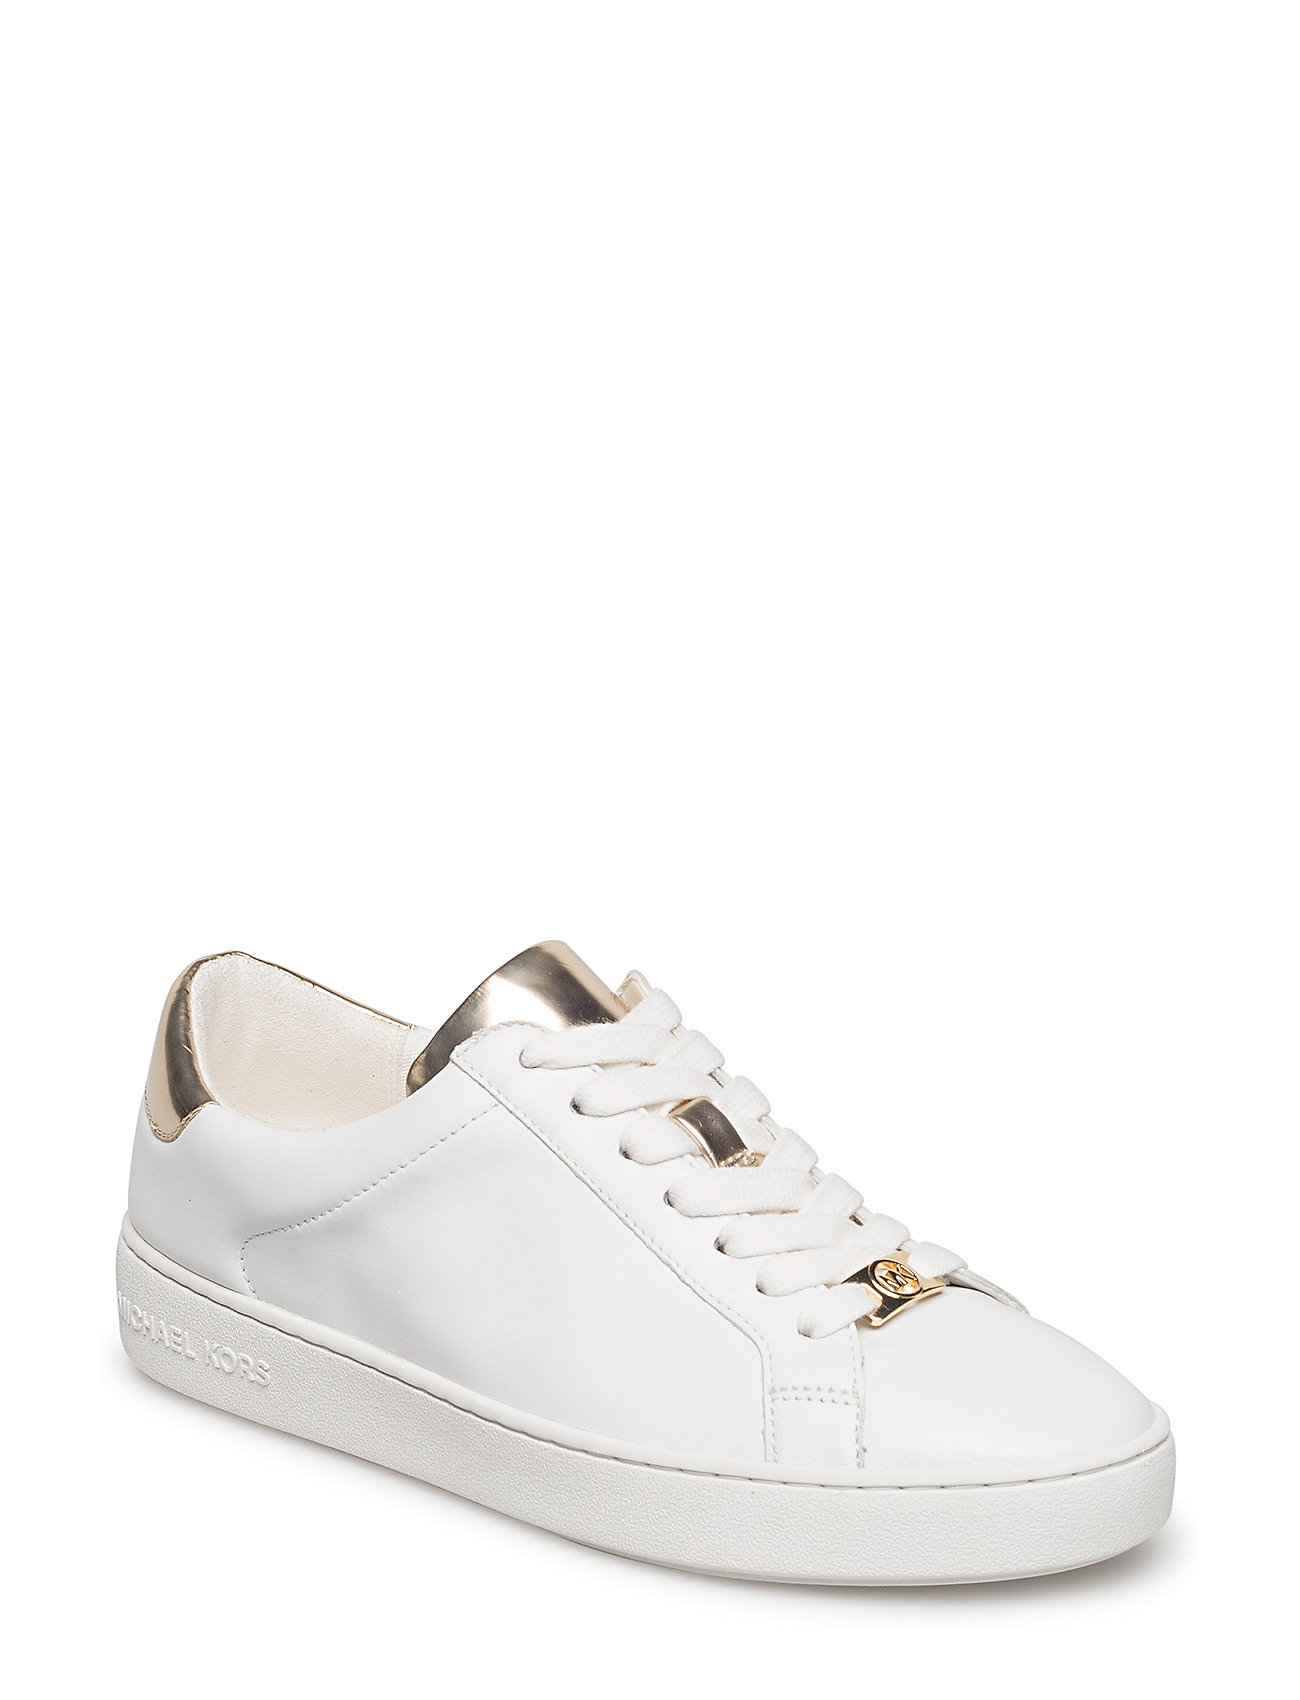 tælle blyant vinkel Guld Michael Kors Irving Lace Up Low-top Sneakers Hvid Michael Kors Shoes  sneakers for dame - Pashion.dk